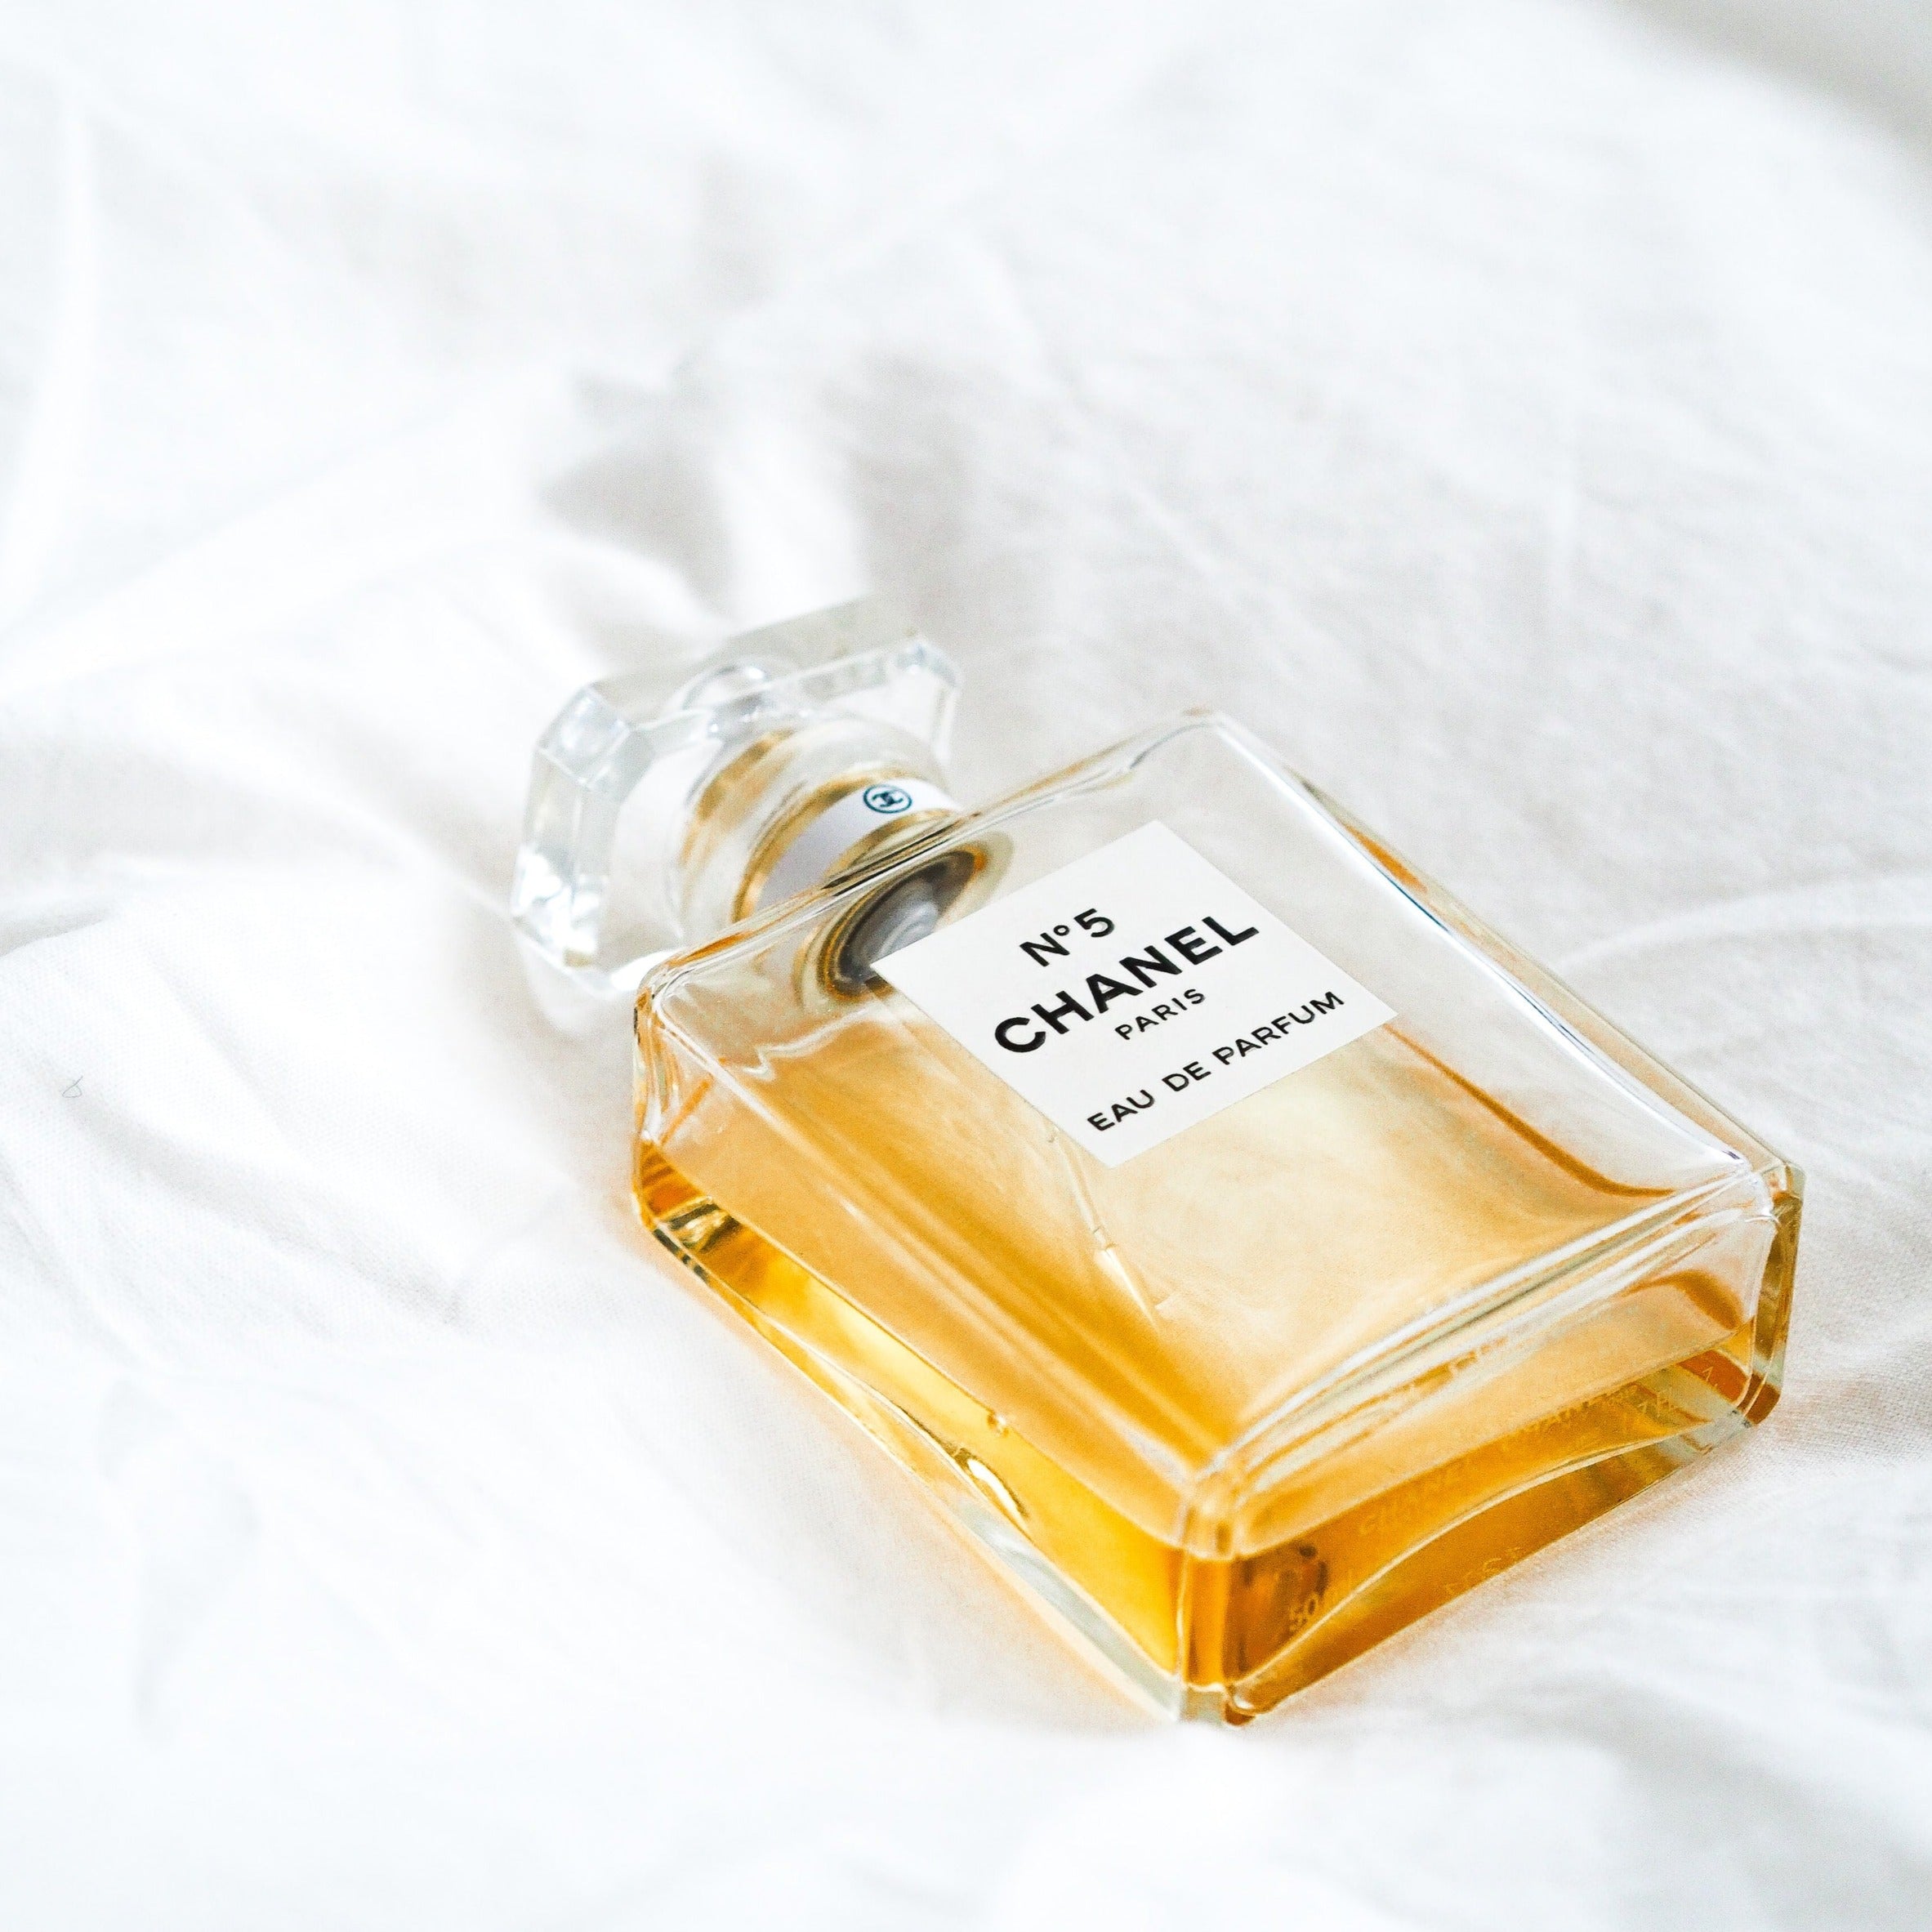 Chanel No.5 Bath Soap | My Perfume Shop Australia